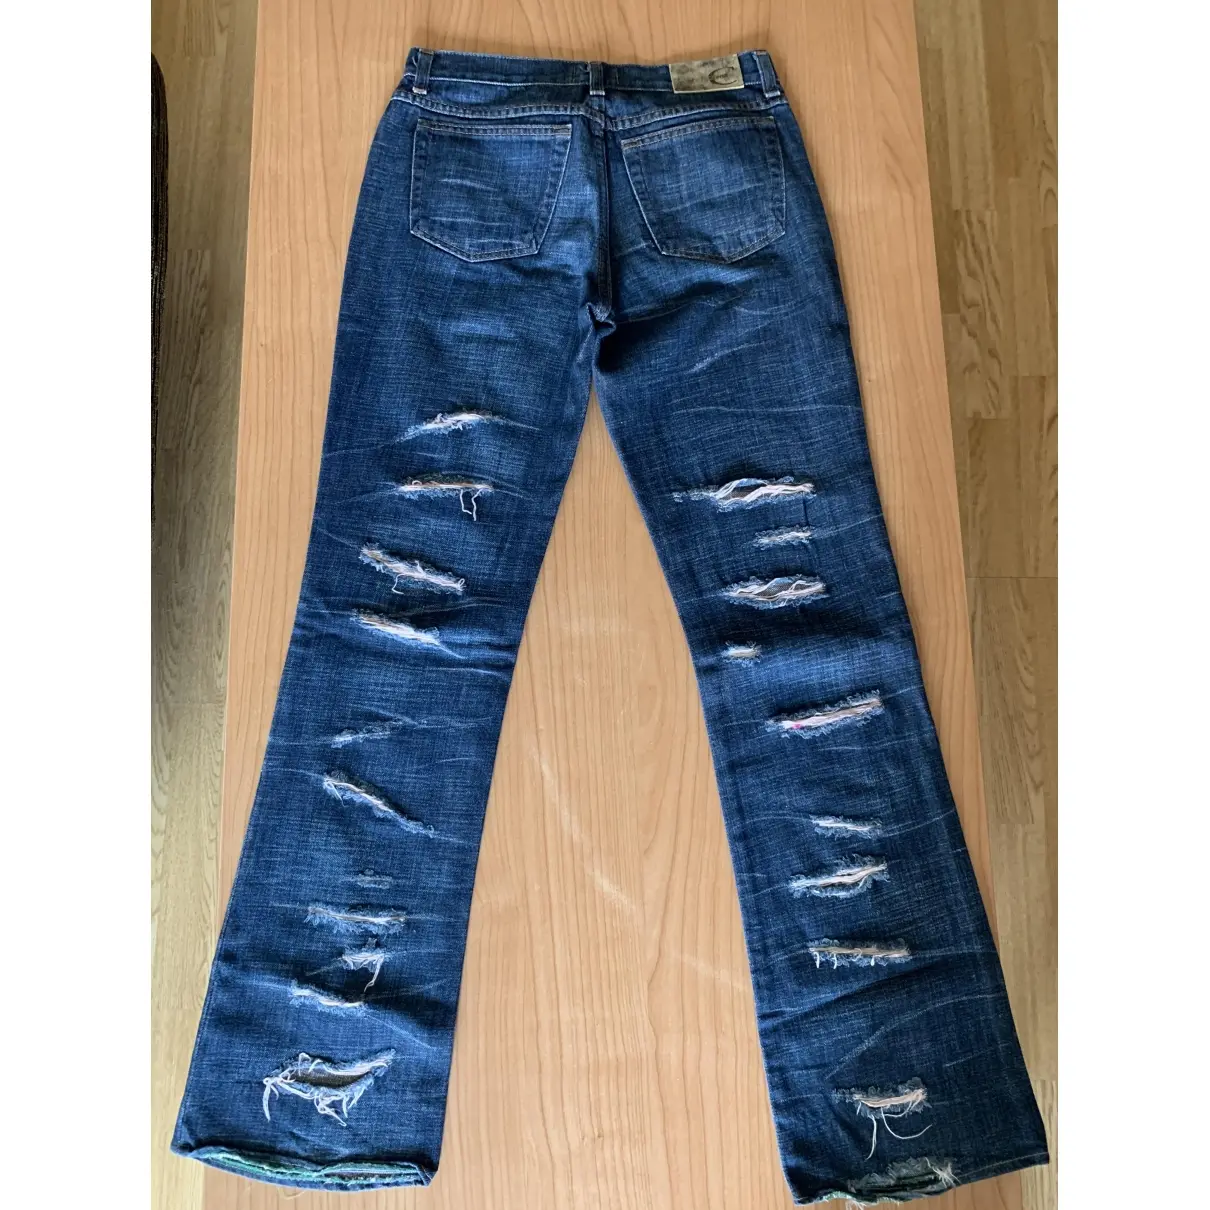 Buy Just Cavalli Large jeans online - Vintage